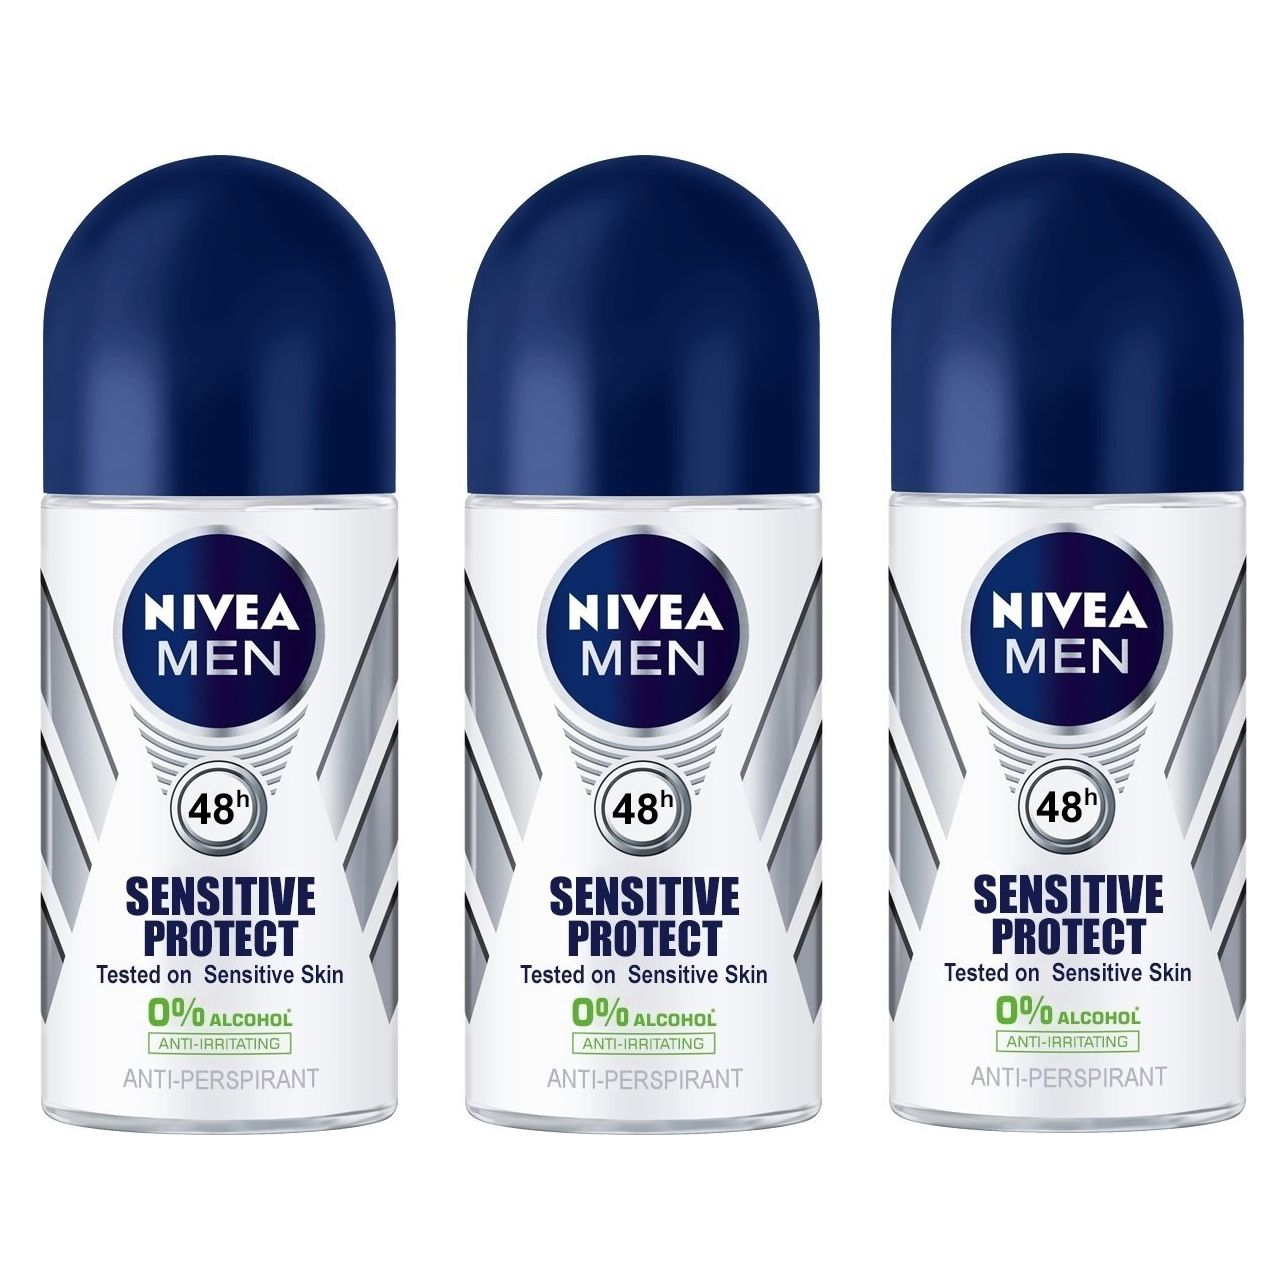 Nivea SENSITIVE PROTECT Men's Roll On Anti-perspirant Deodorant 1.7oz / 50ml